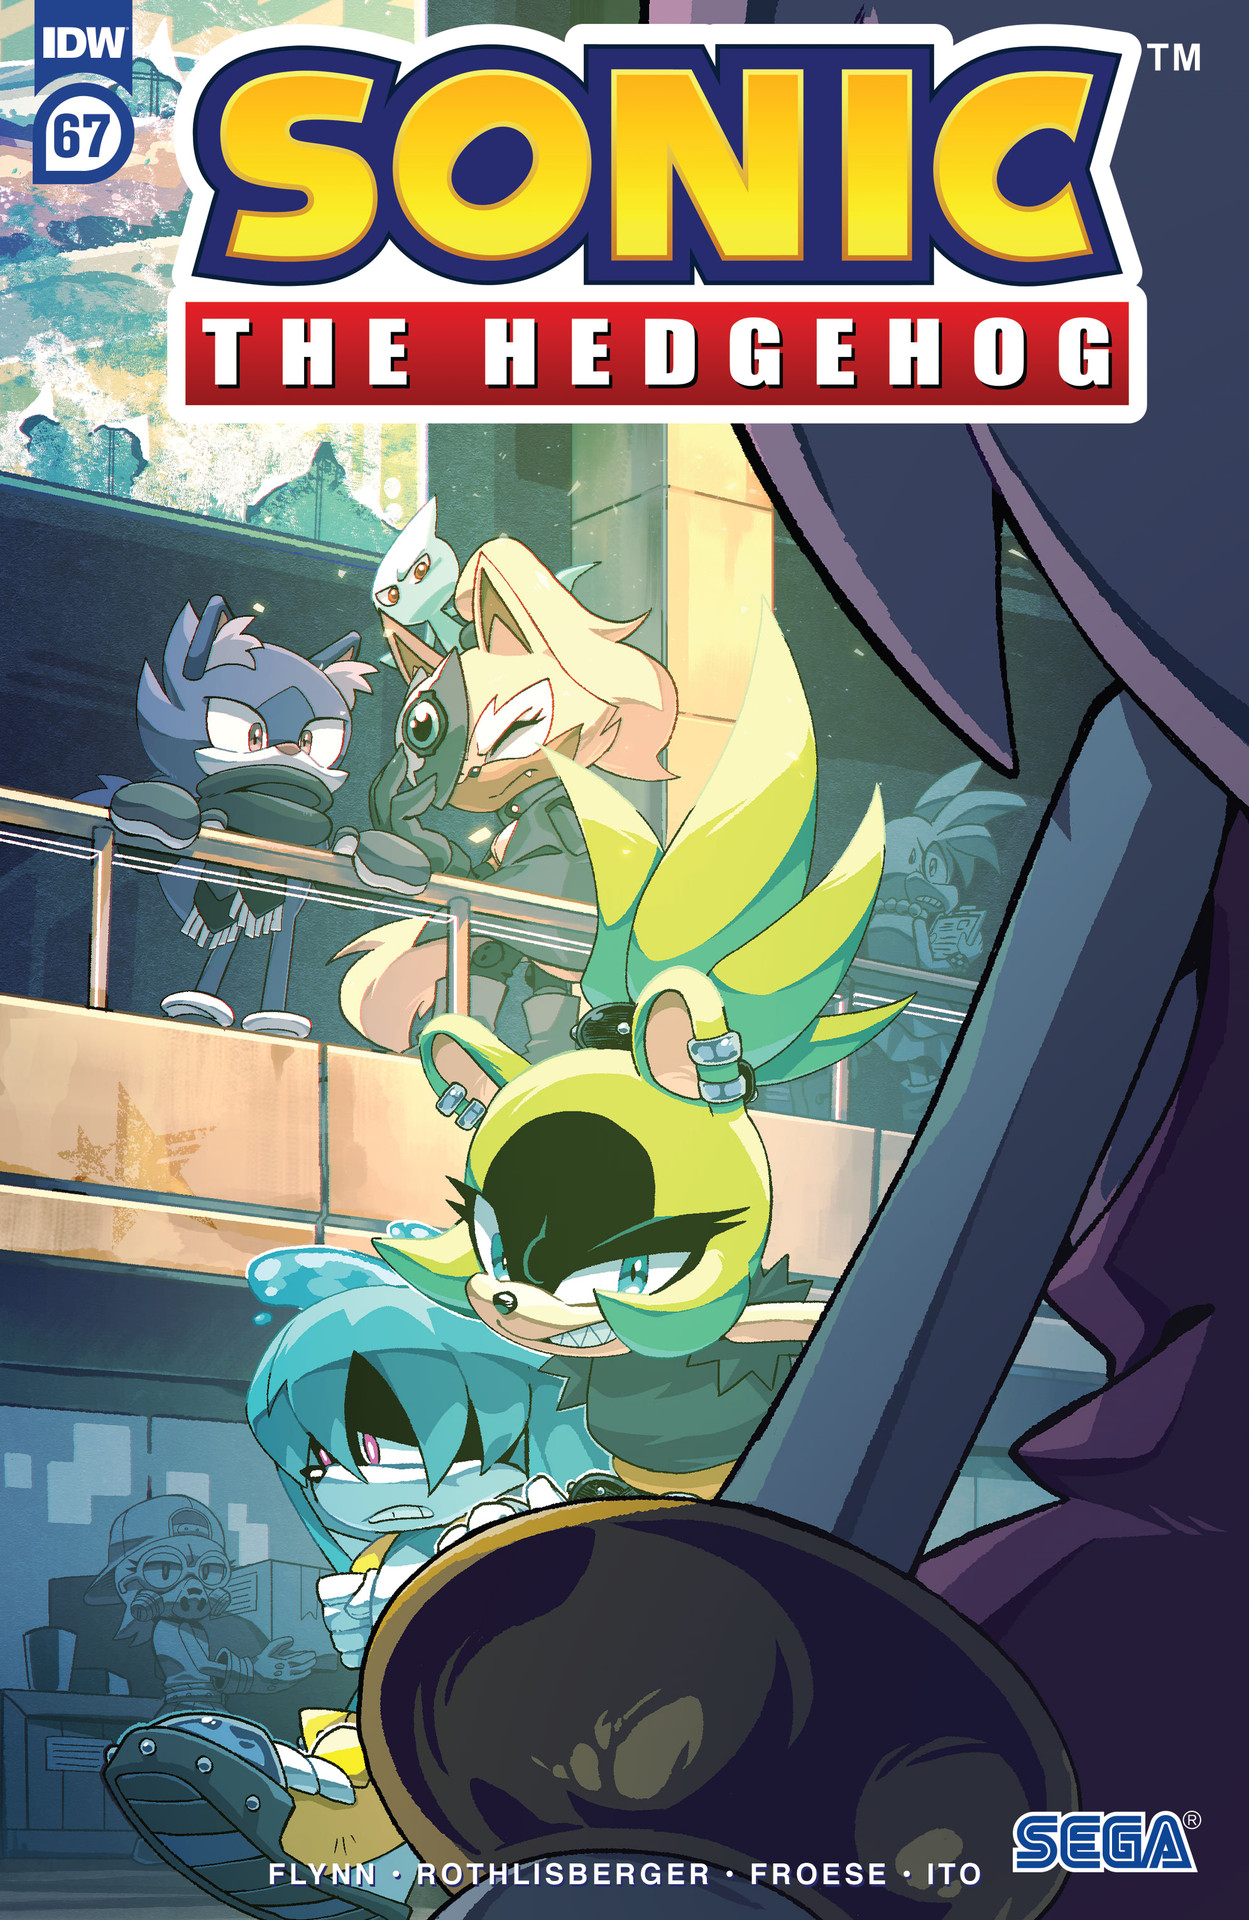 Sonic The Hedgehog IDW (#1-68) - Read Comic Online Sonic The Hedgehog #67